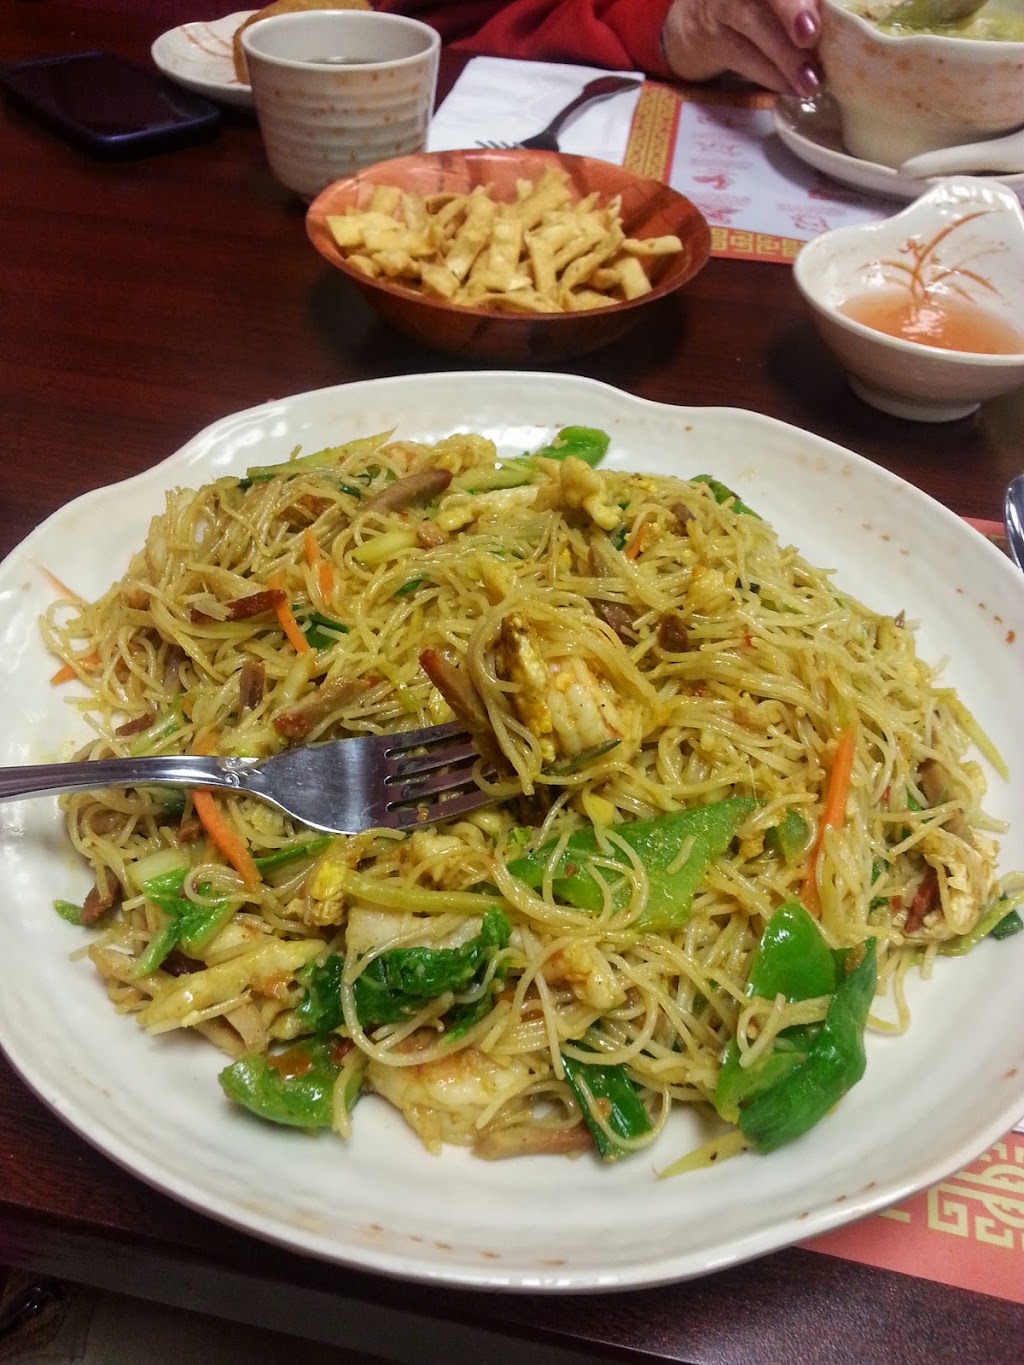 J & P Chinese Restaurant | 25 Morristown Rd, Matawan, NJ 07747, USA | Phone: (732) 583-2888